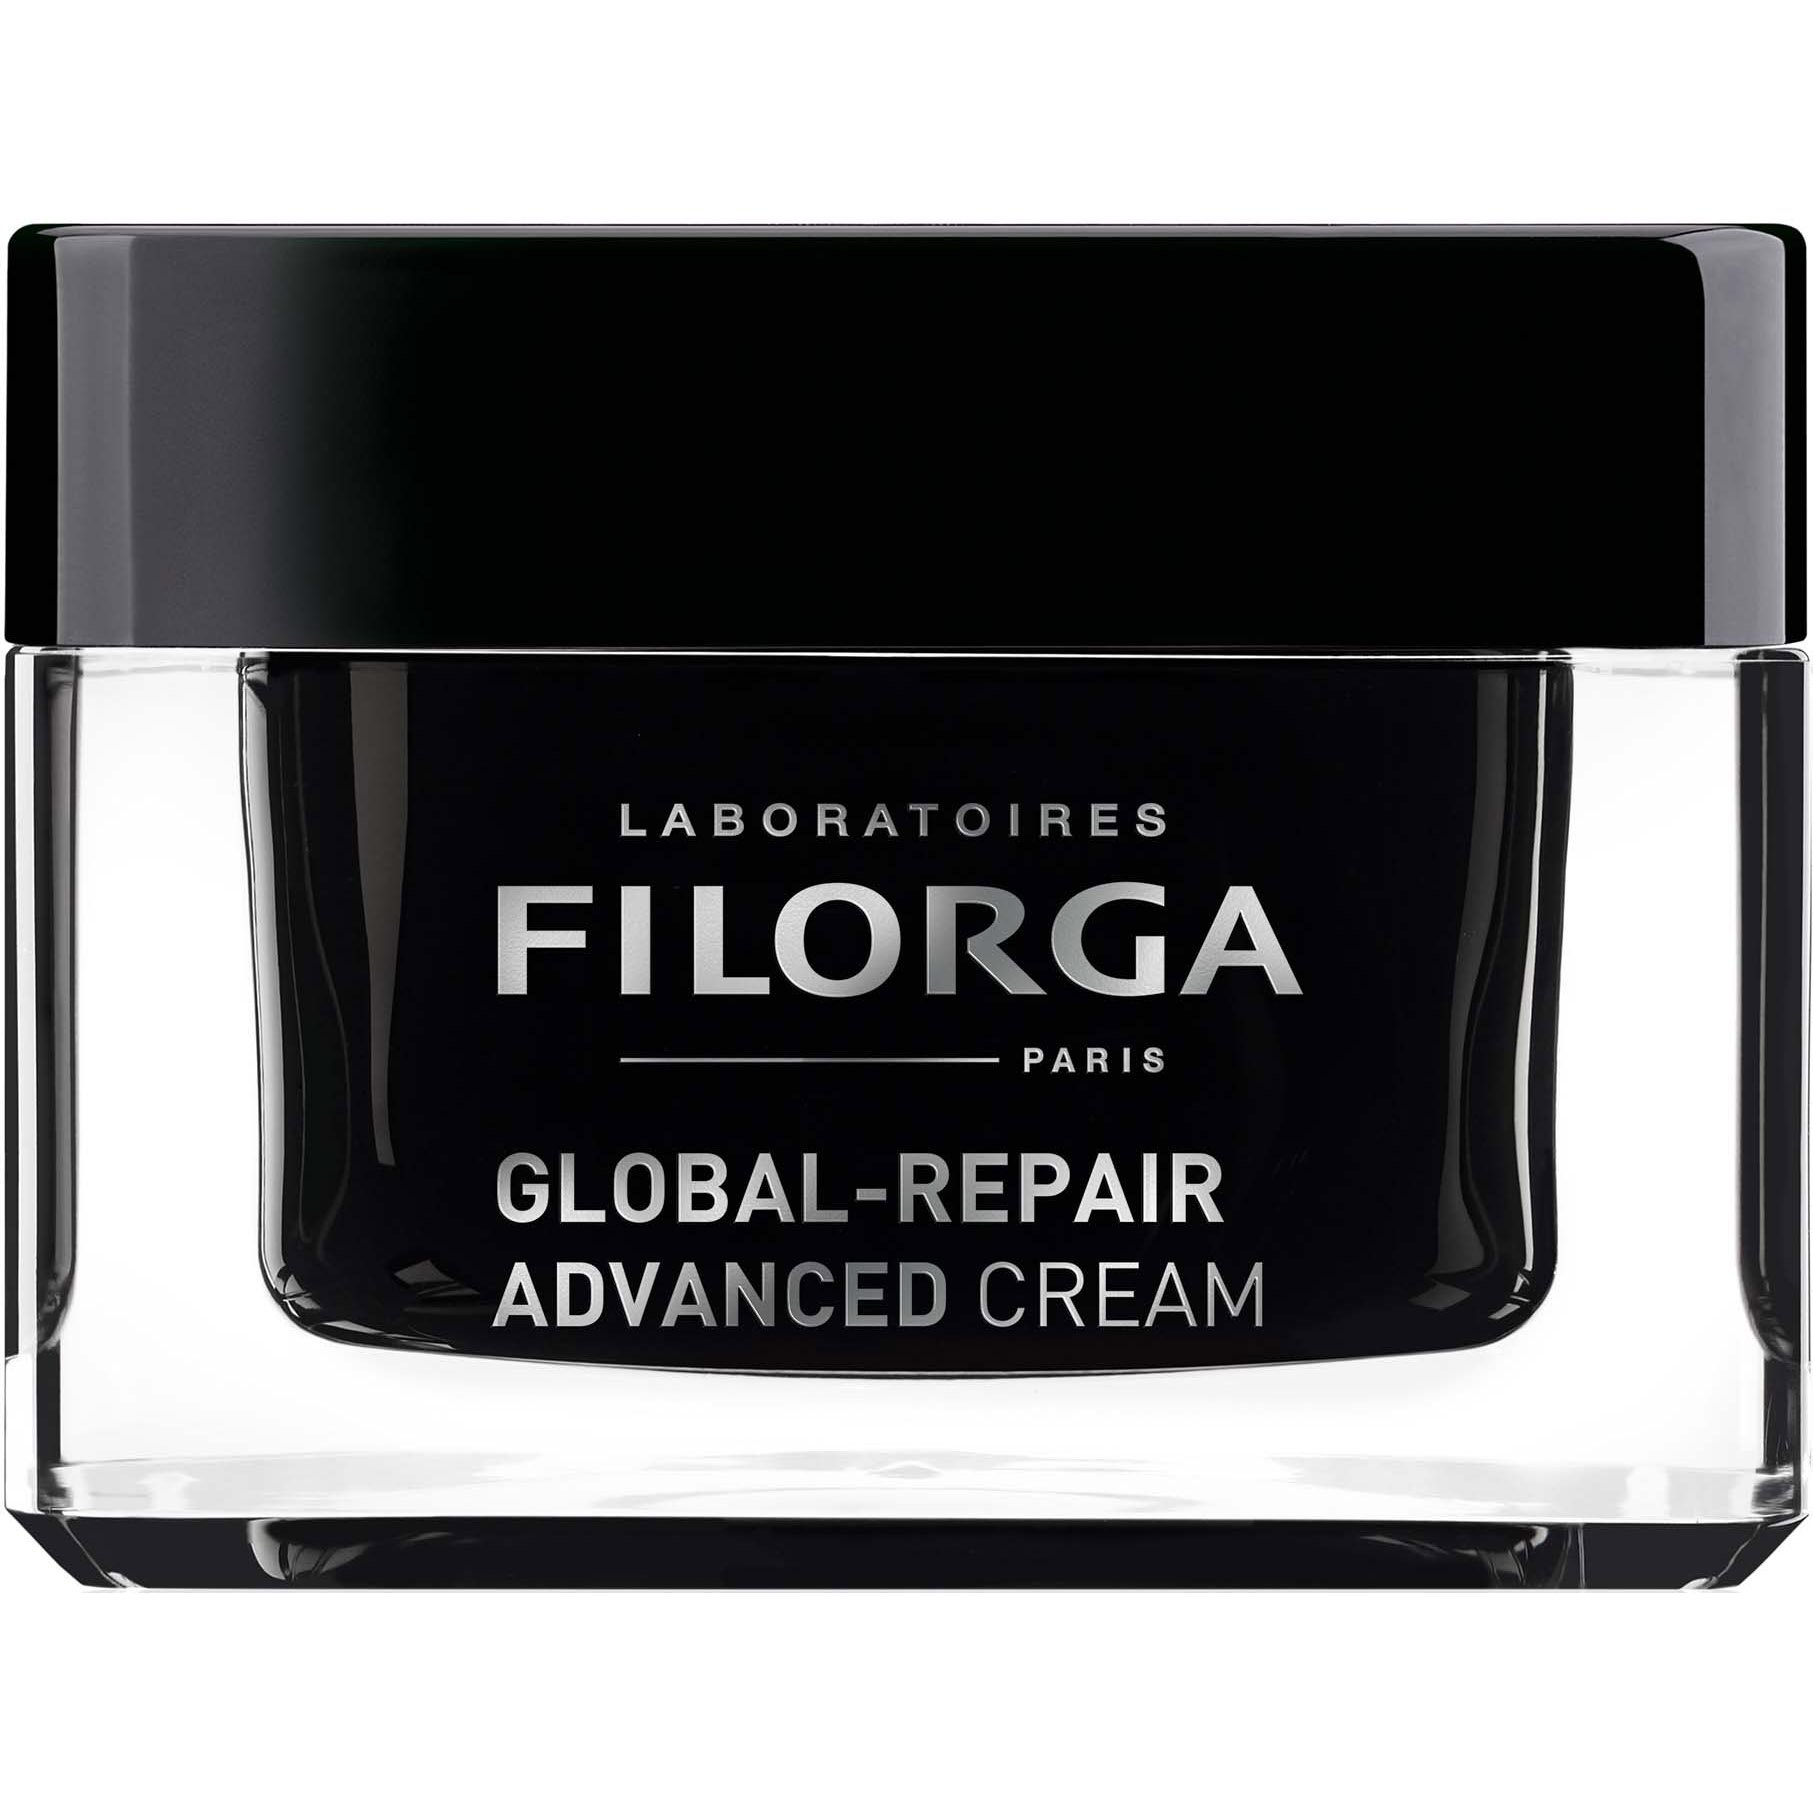 Омолоджувальний крем для обличчя Filorga Global-Repair Advanced Cream 50 мл - фото 1